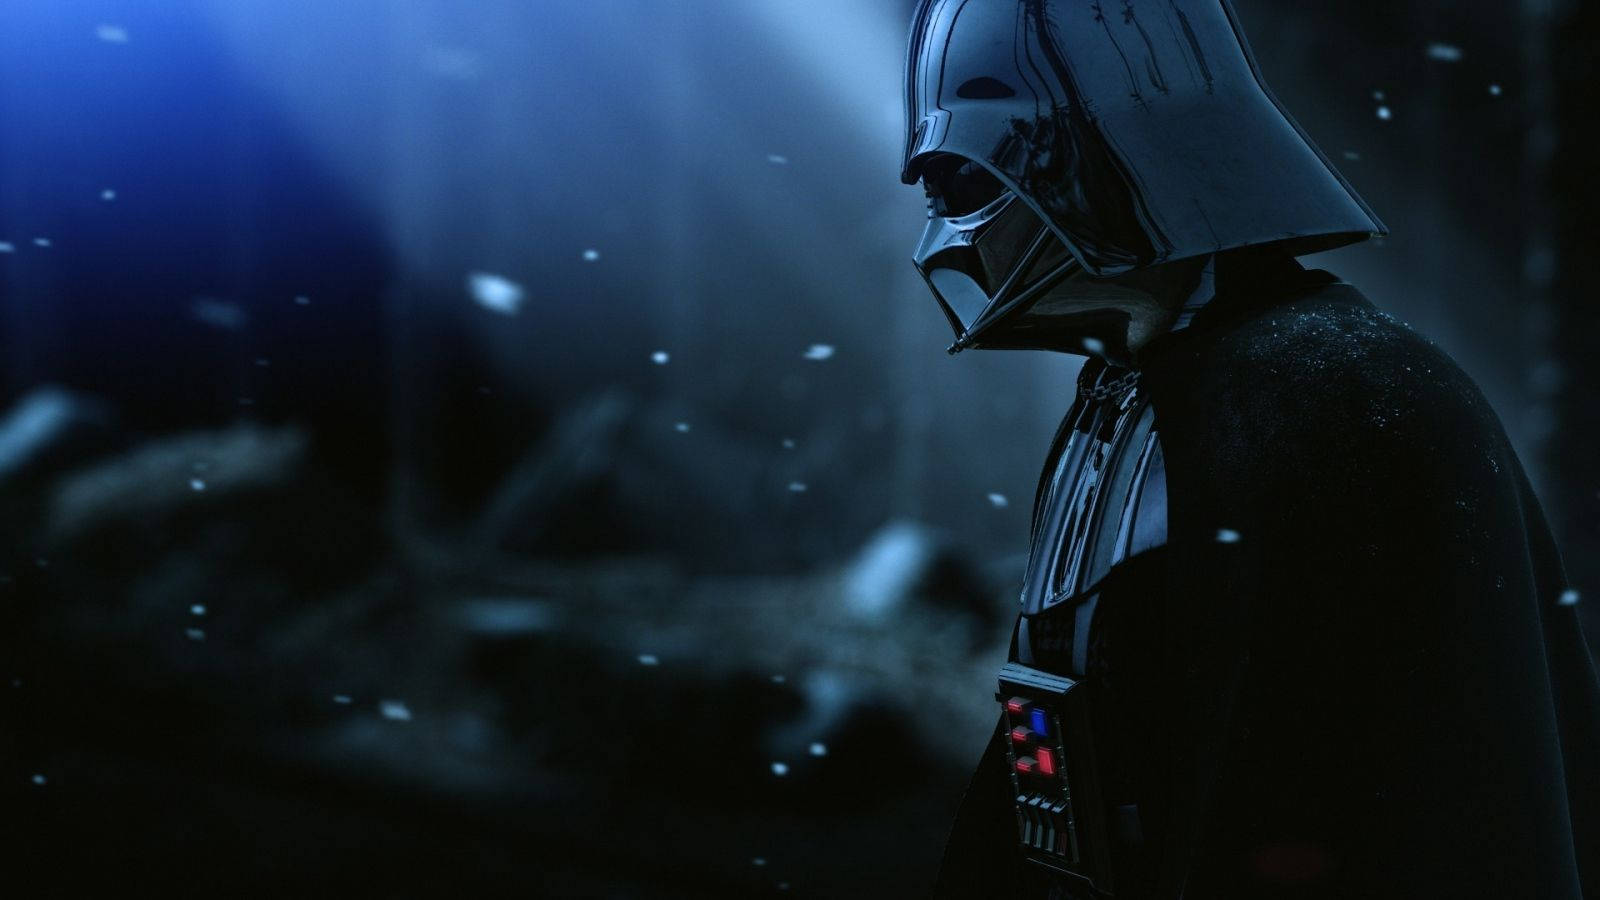 Darth Vader Villain Poster Background